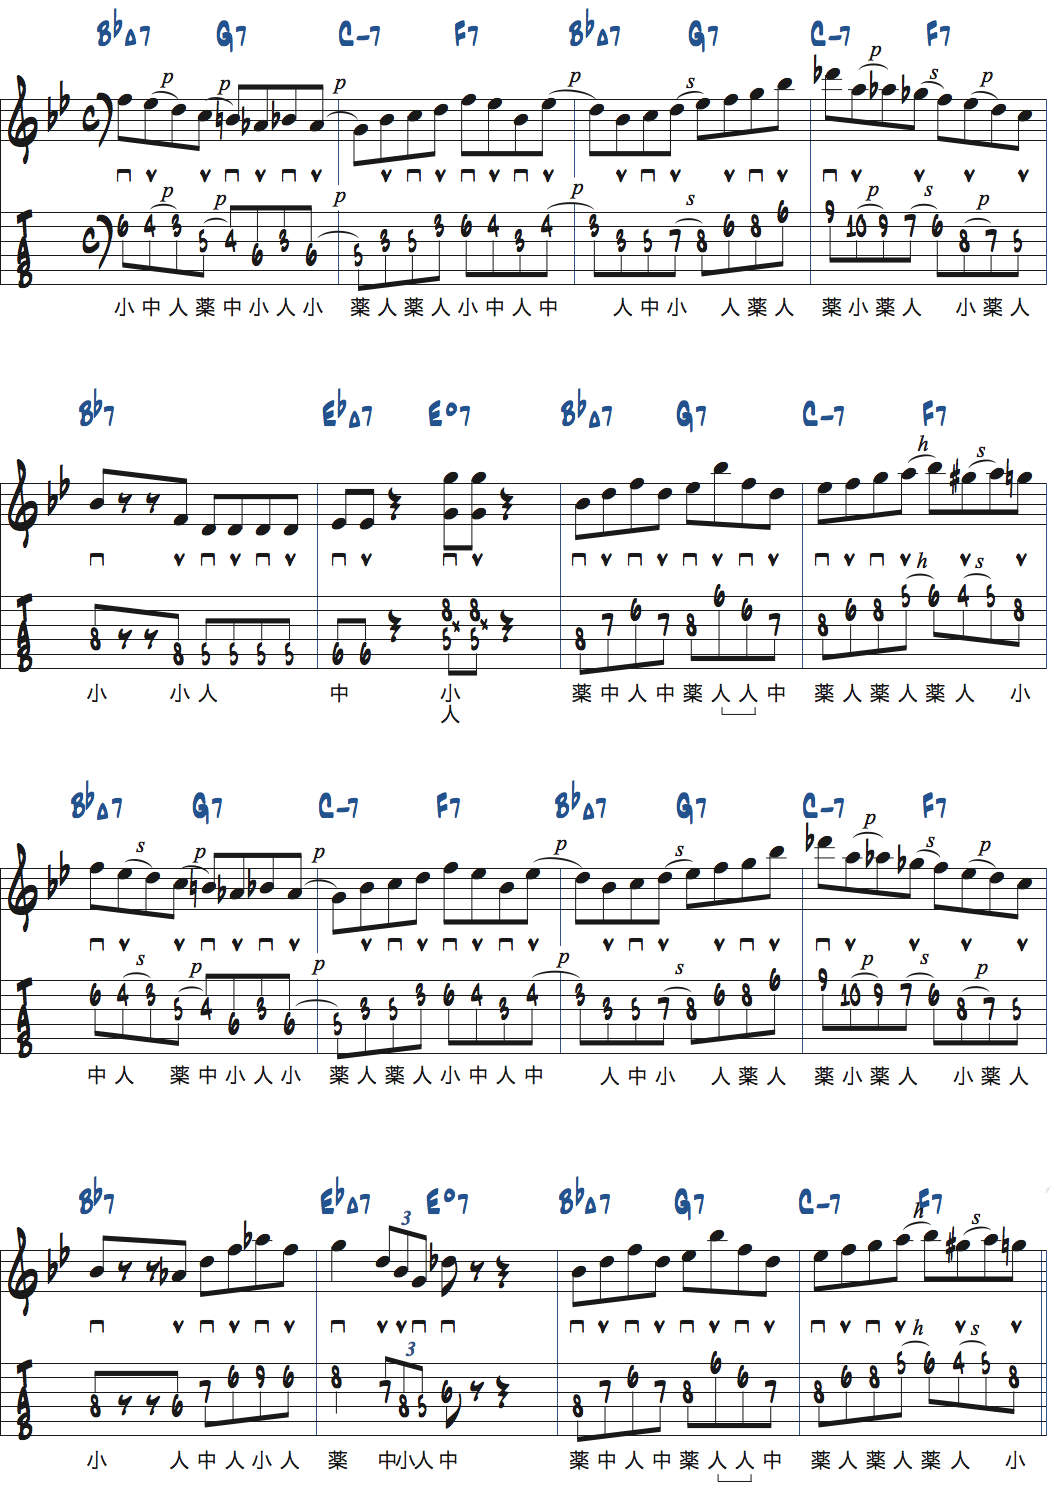 BbメジャーI-VI-II-Vリックの前後をコードトーンでアドリブした例楽譜